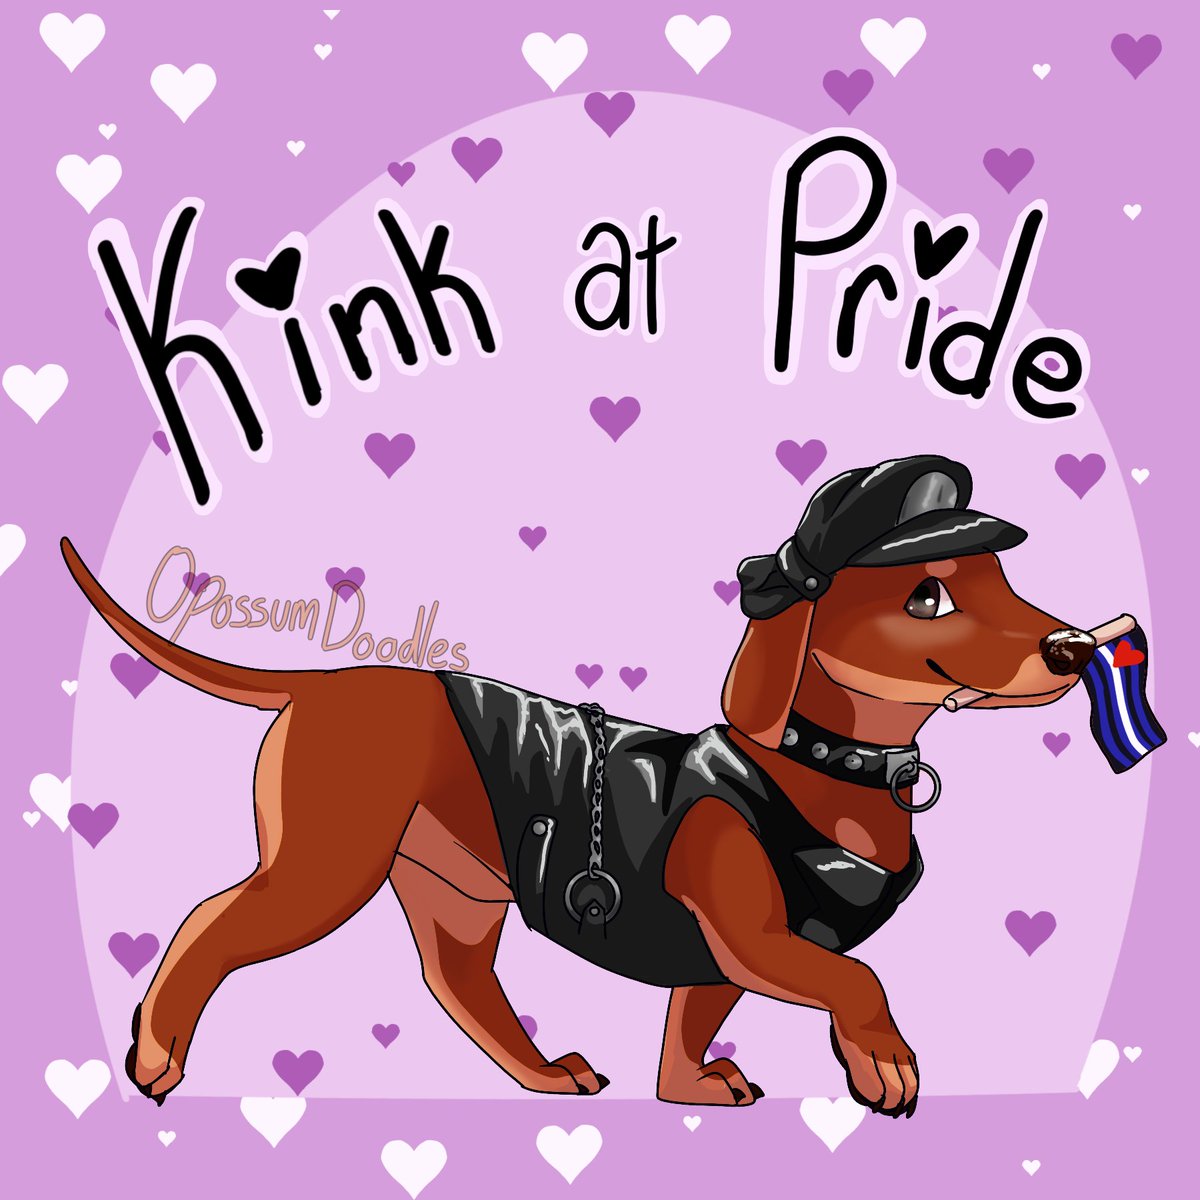 Bear and Leather pride 🤎💙
#PrideMonth #leatherpride #digitalart #kinkatpride #DigitalArtist #TransArtist